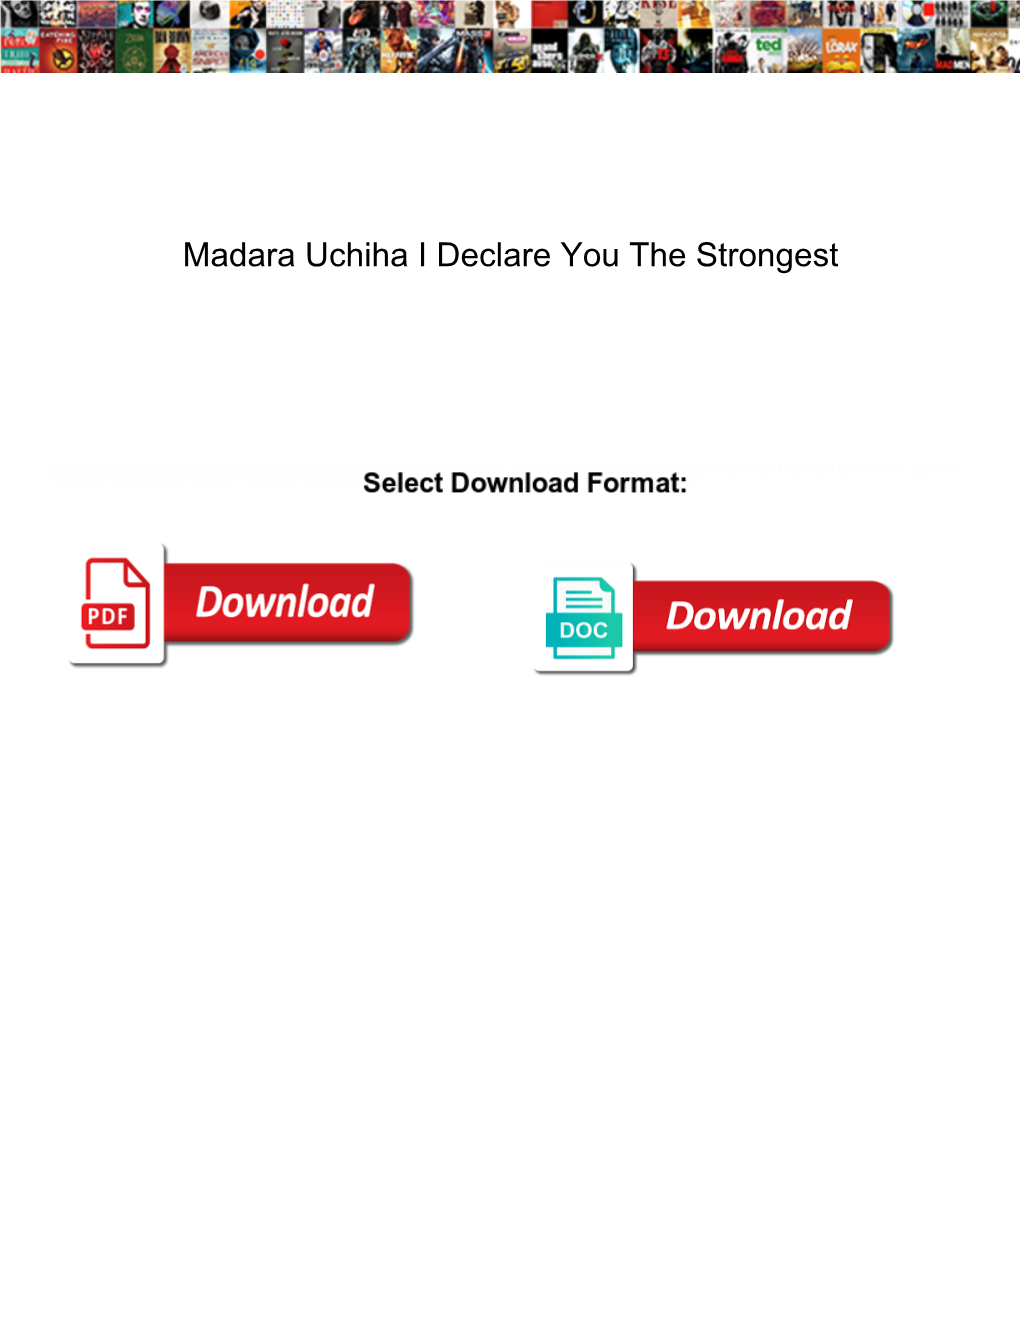 Madara Uchiha I Declare You the Strongest